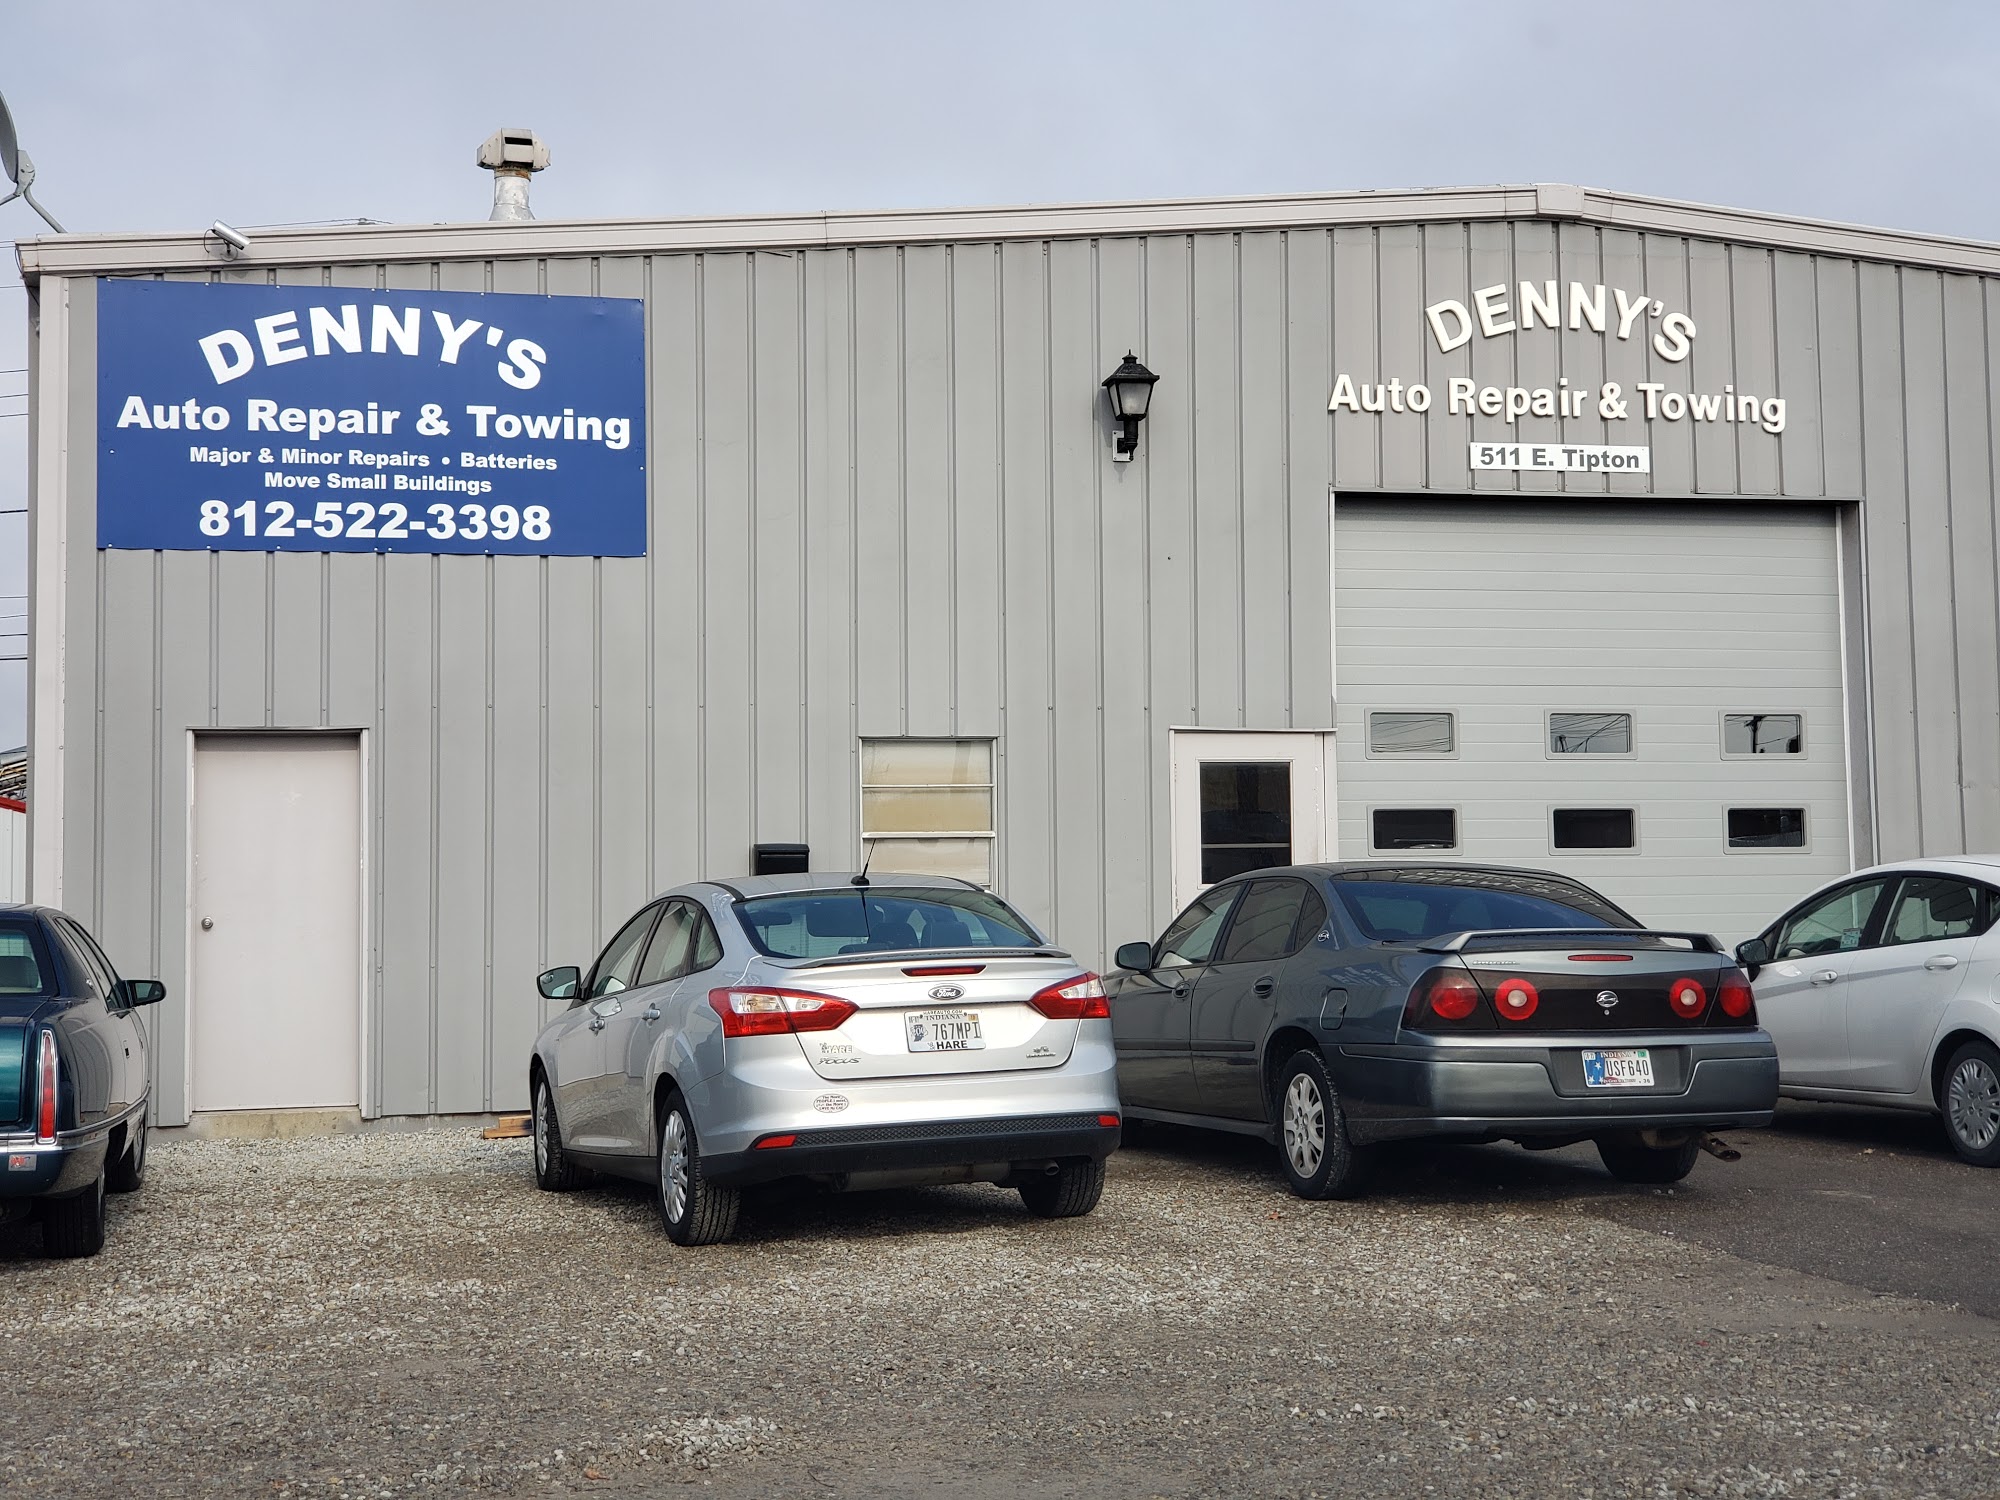 Denny's Auto Repair & Towing